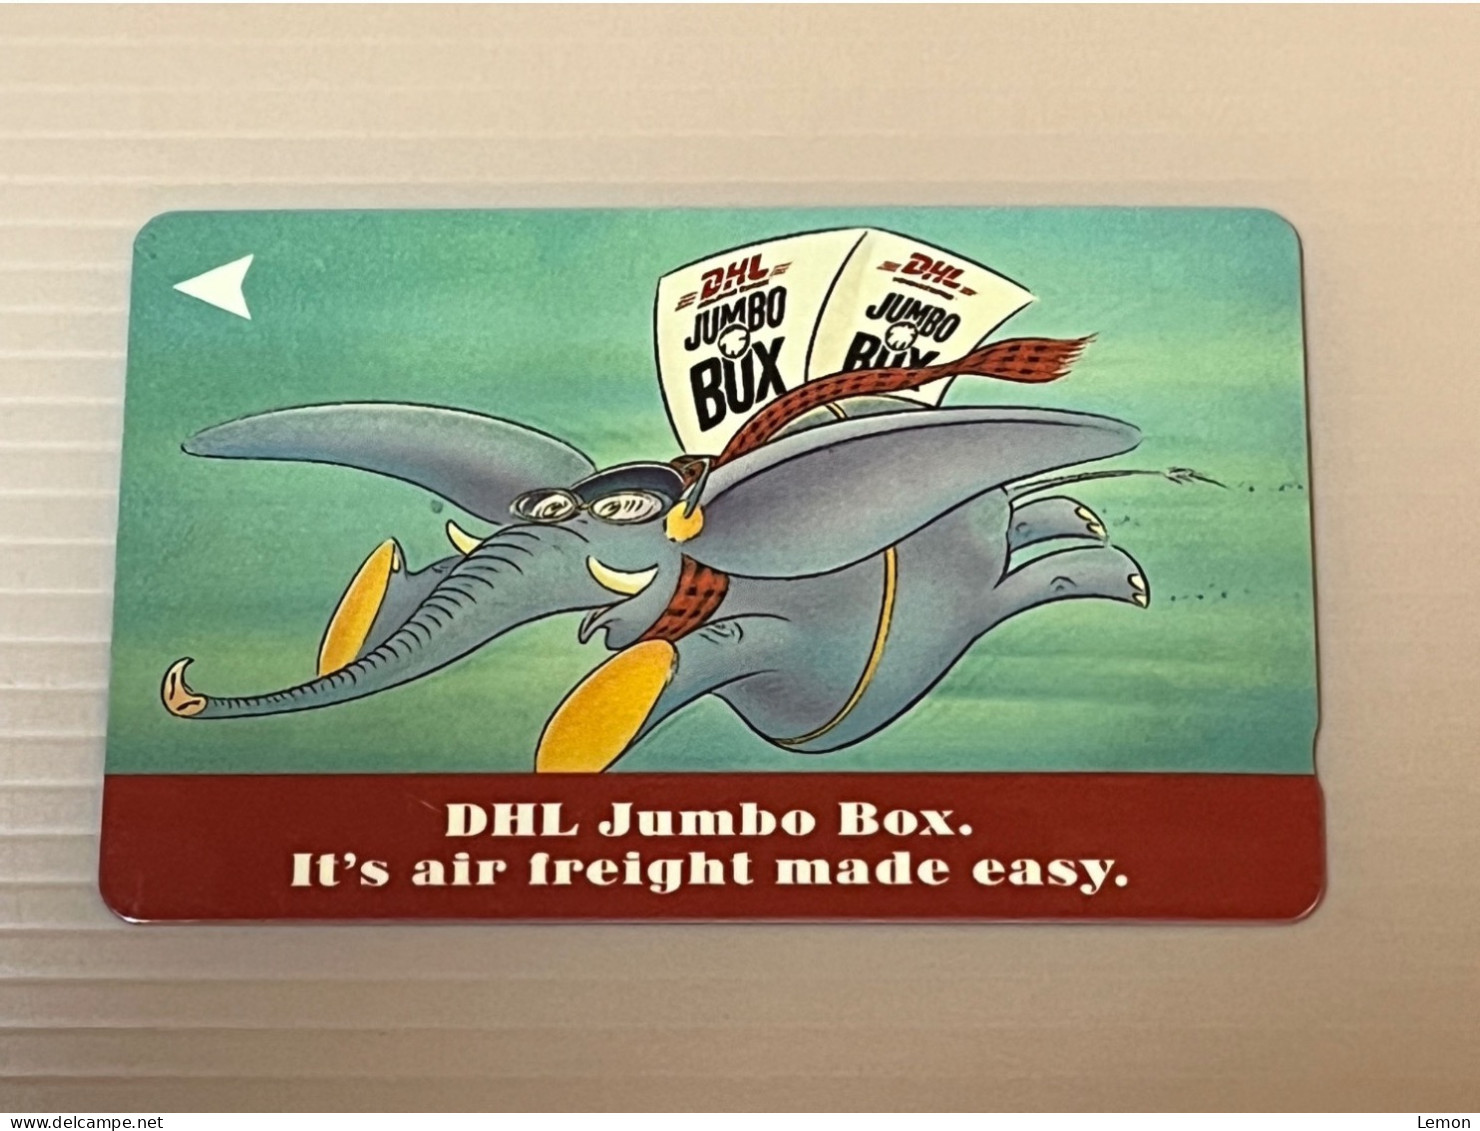 Mint Singapore Telecom Singtel GPT Phonecard, DHL Jumbo Box Flying Elephant, Set Of 1 Mint Card - Singapore